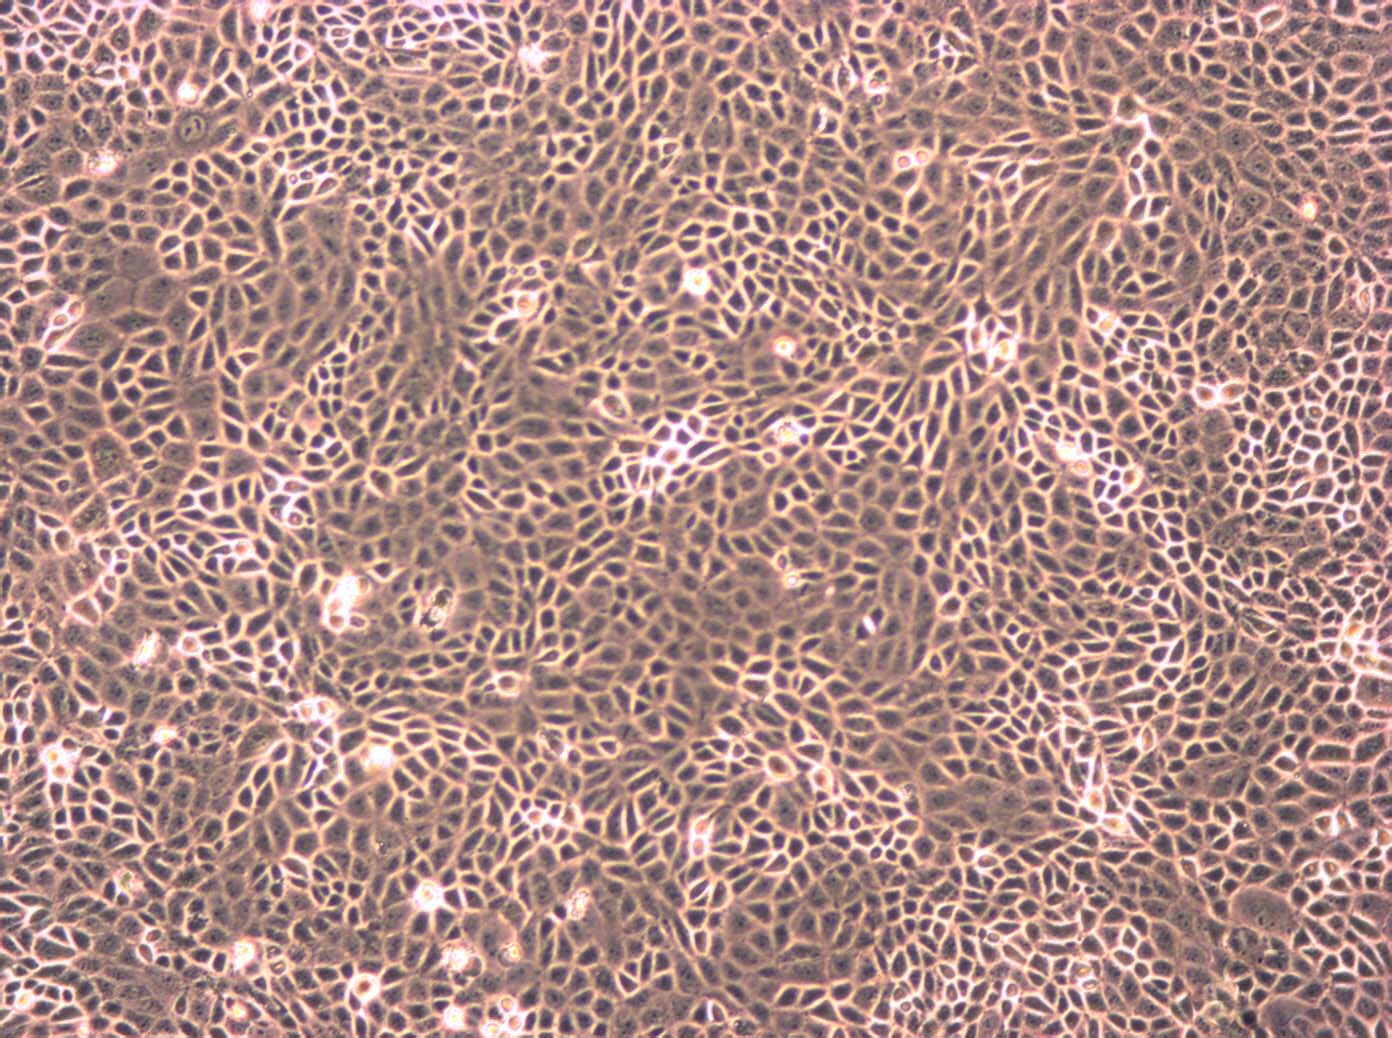 HMEC-1 Cells|人微血管内皮需消化细胞系